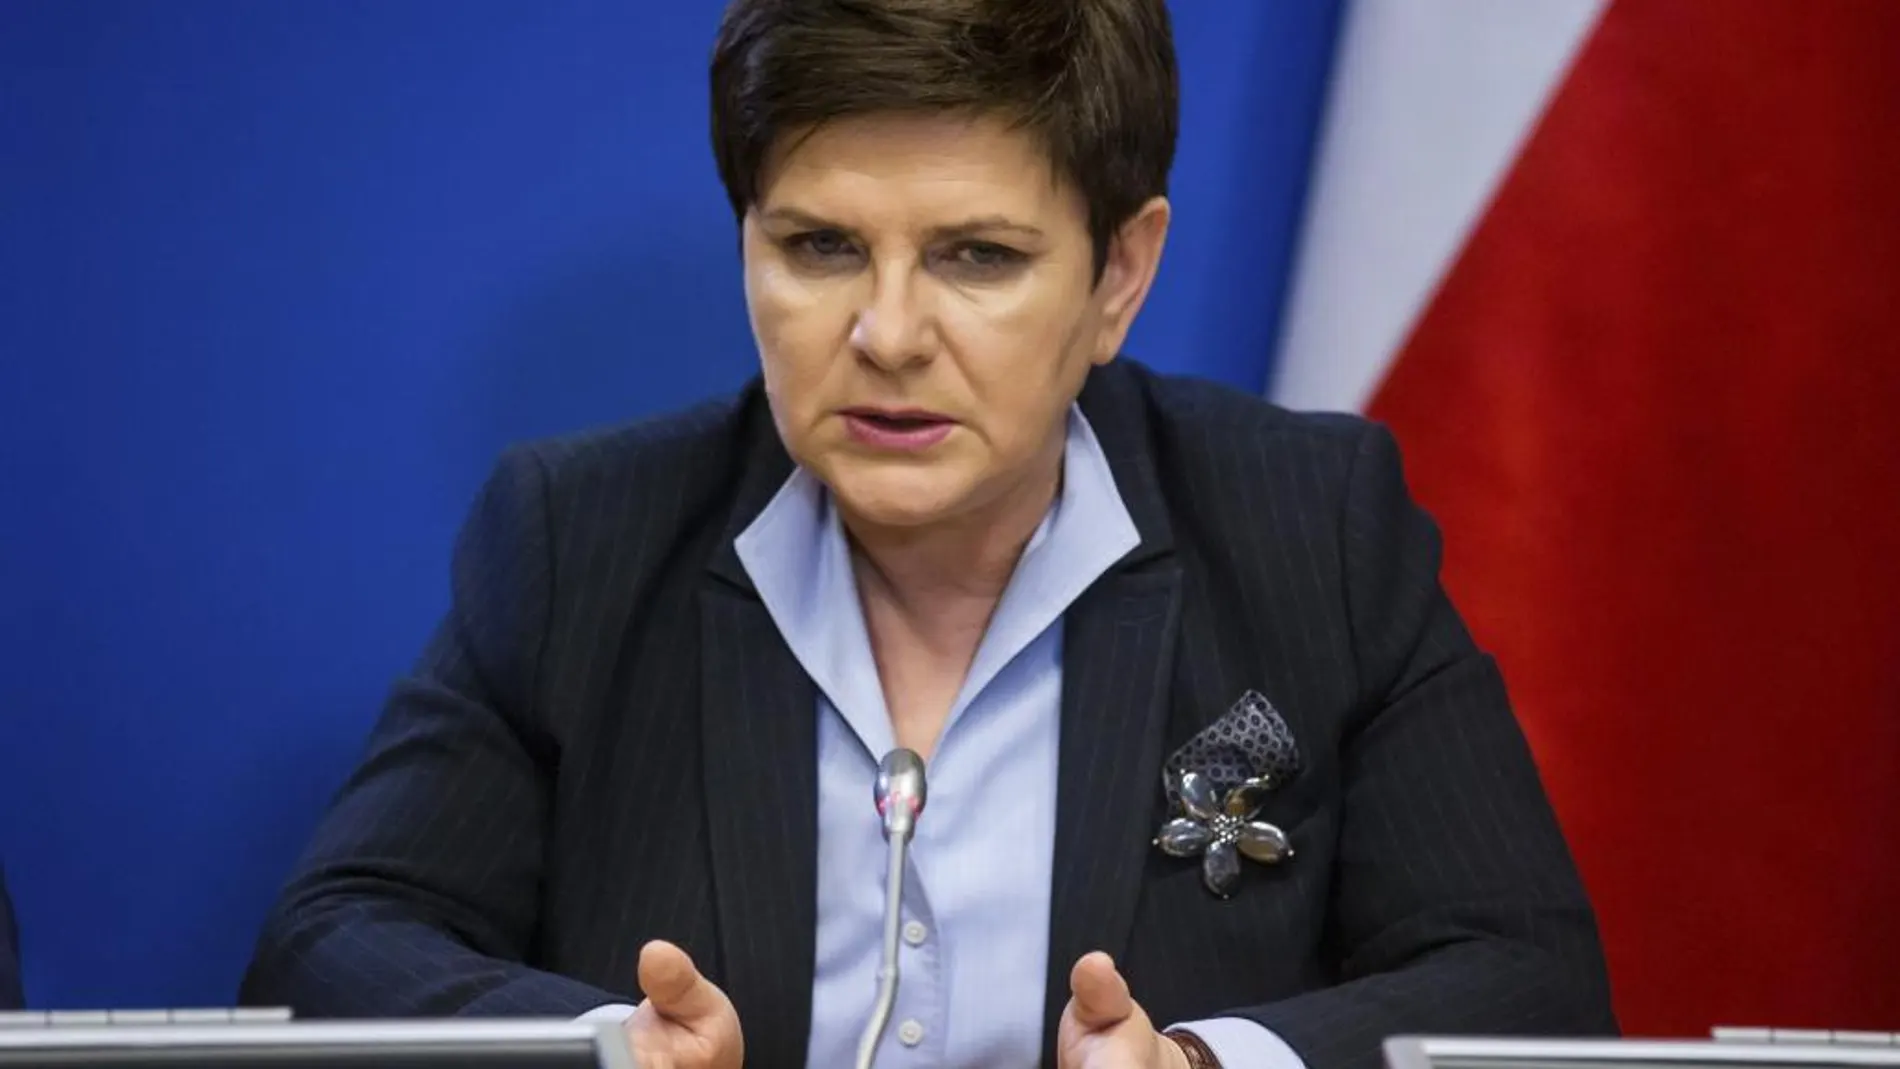 La primera ministra de Polonia, Beata Szydlo, incide en la unidad de la UE